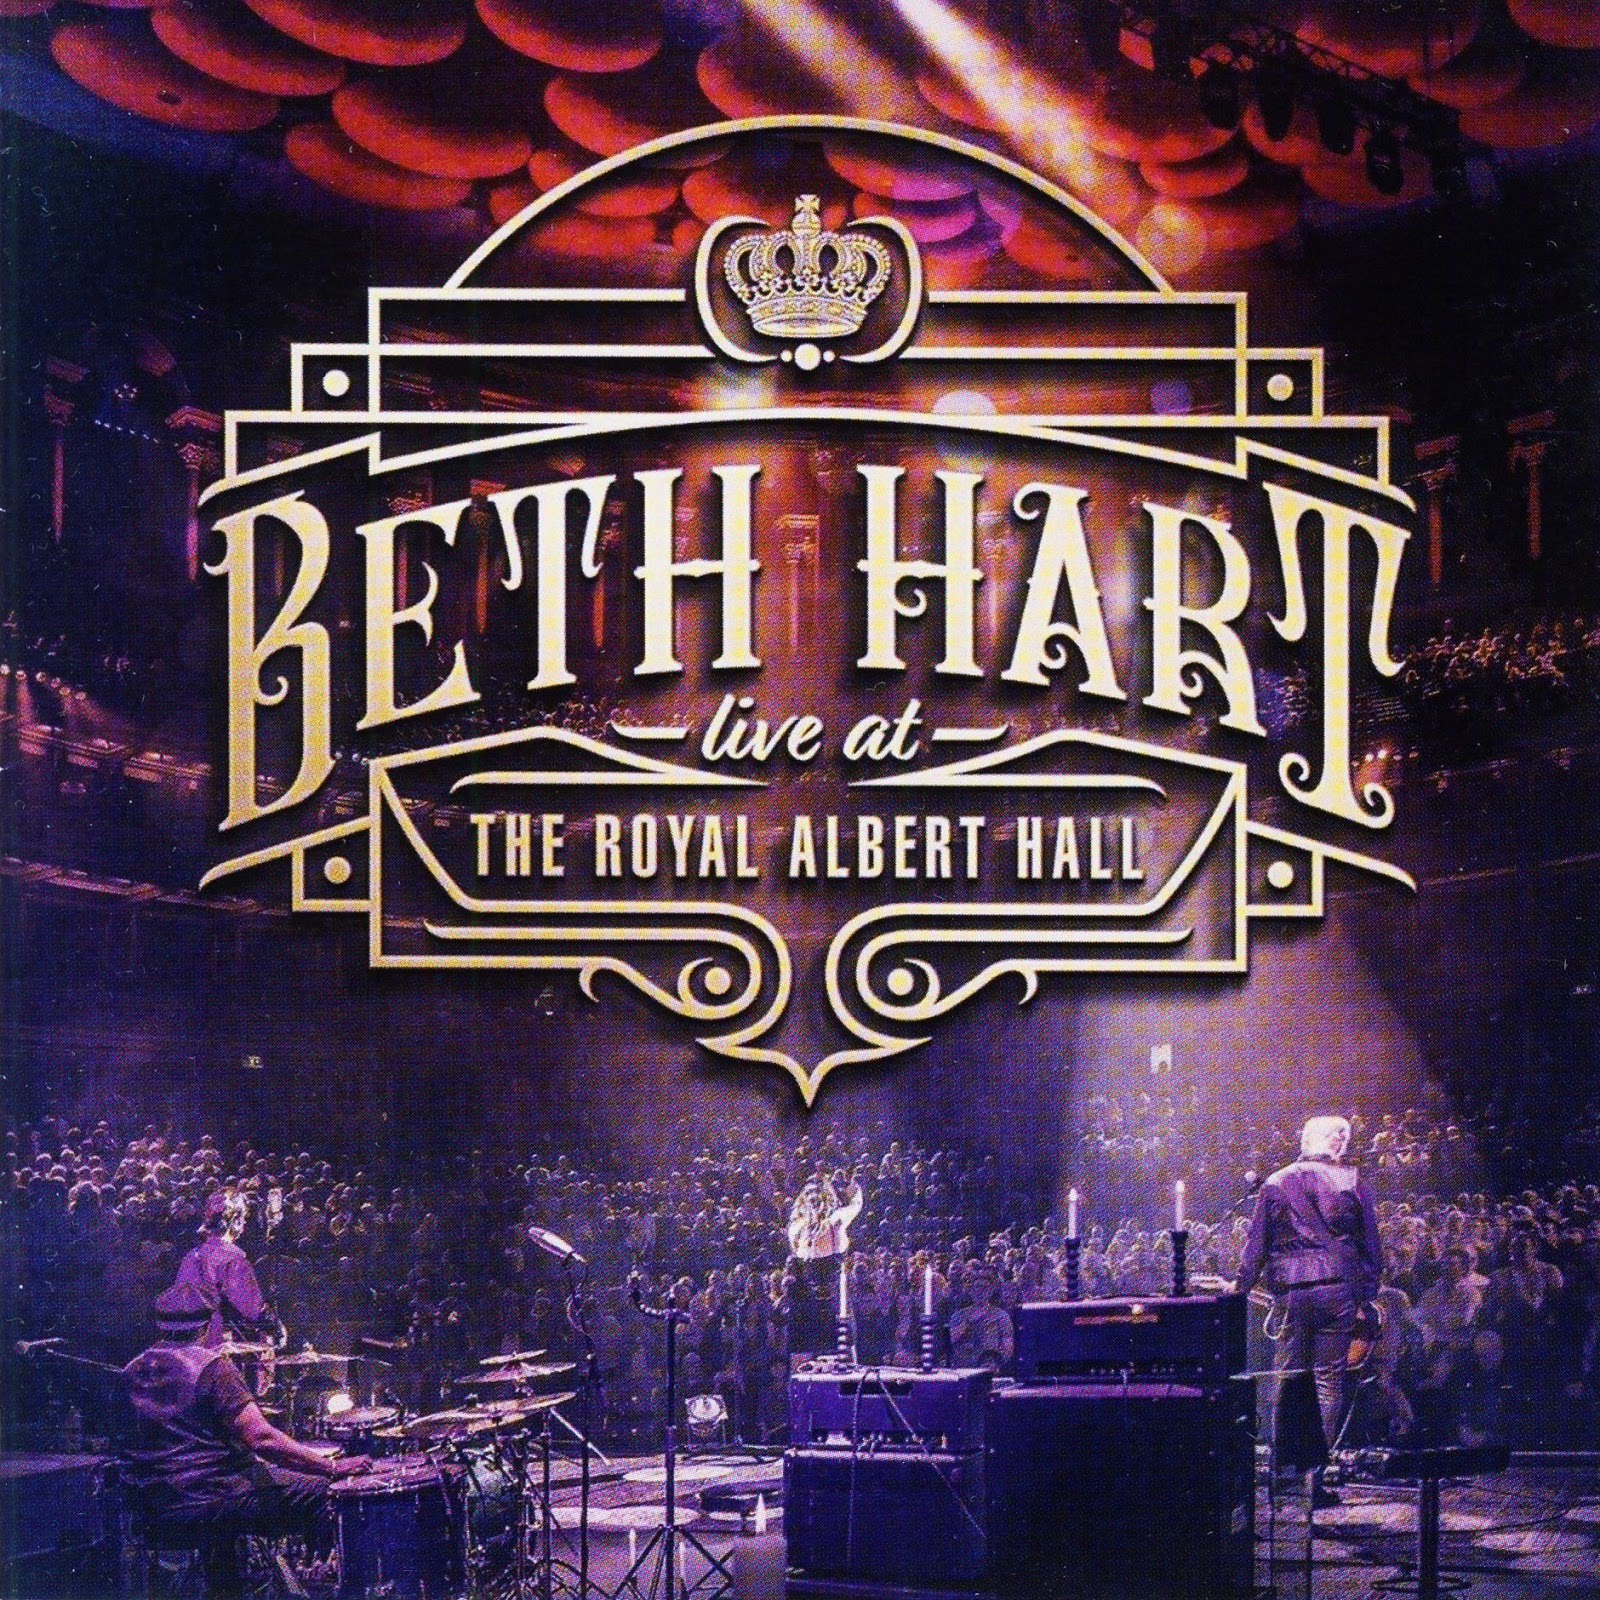 2018 Live At The Royal Albert Hall - Beth Hart - Rockronología